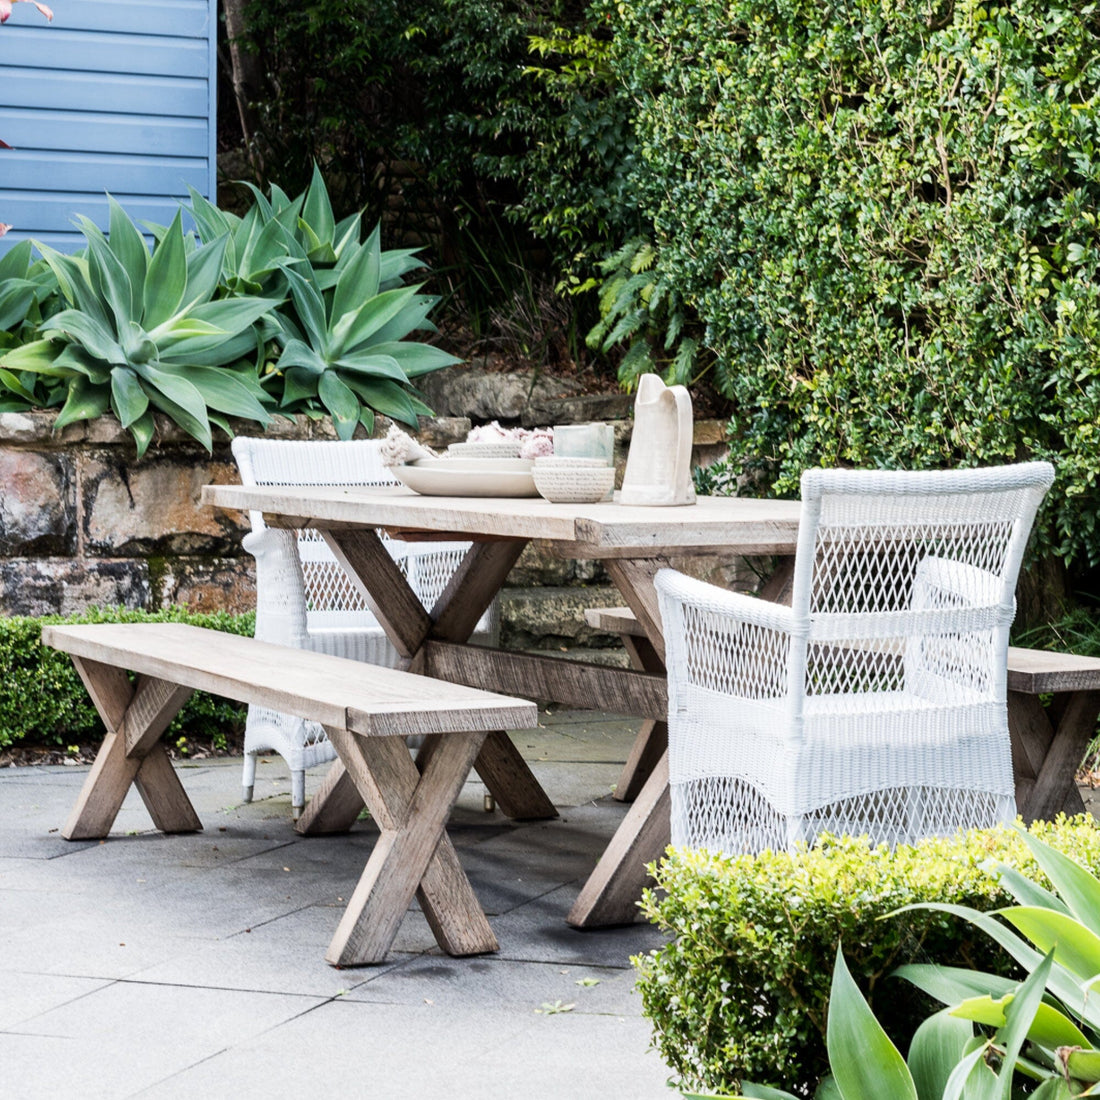 Custom Outdoor X-Base Dining Table Outdoor Furniture Beachwood Designs 